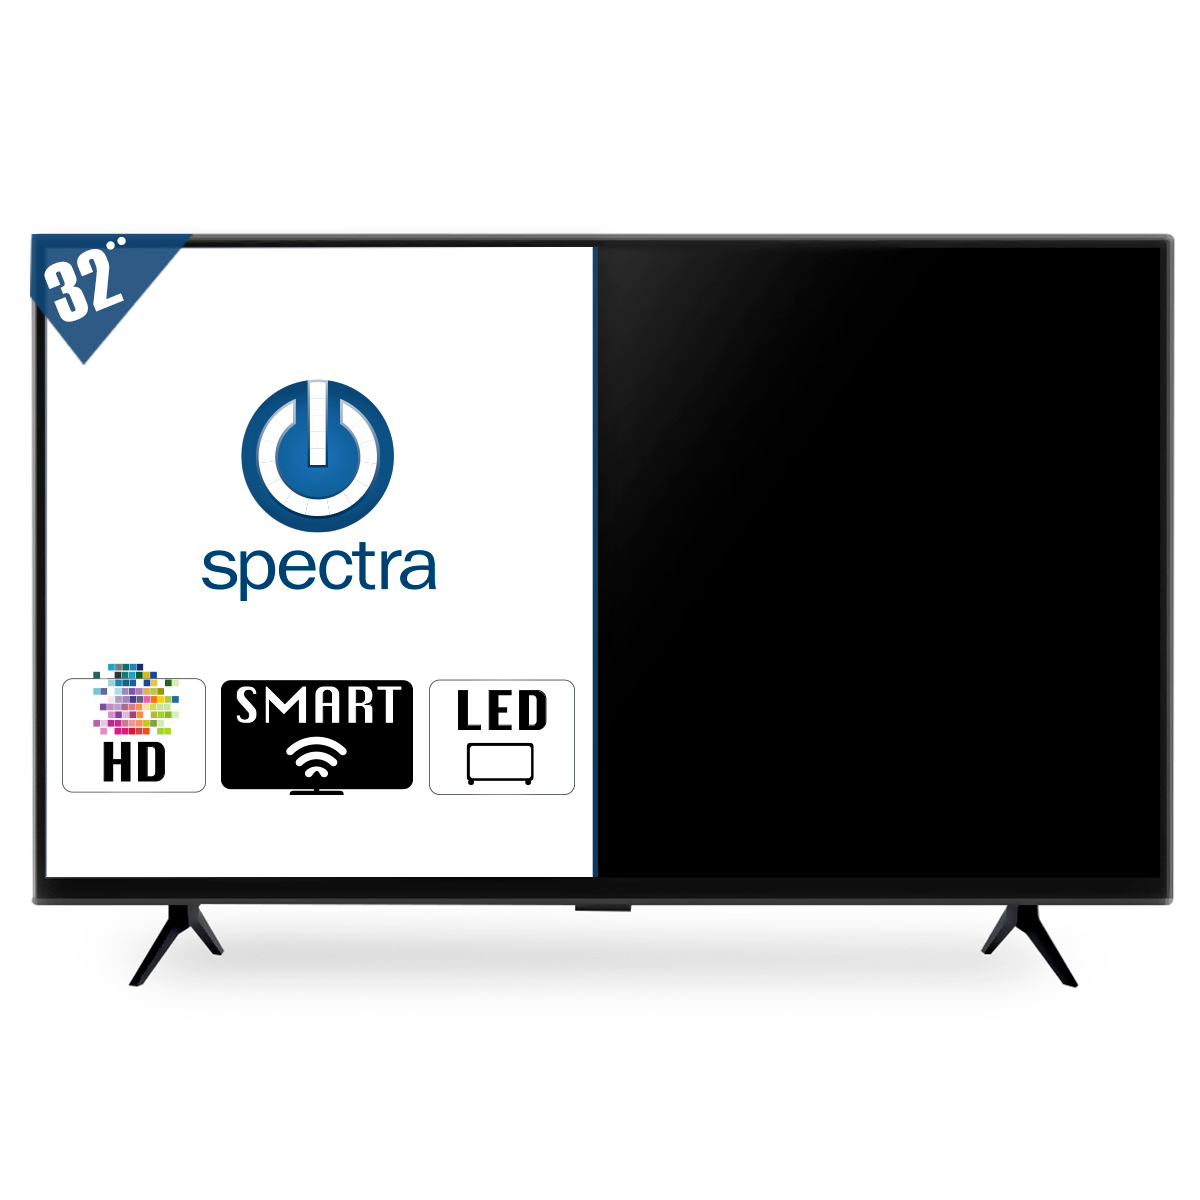 Pantalla Spectra Smart TV Roku 32 pulg. 32-RSP Led HD